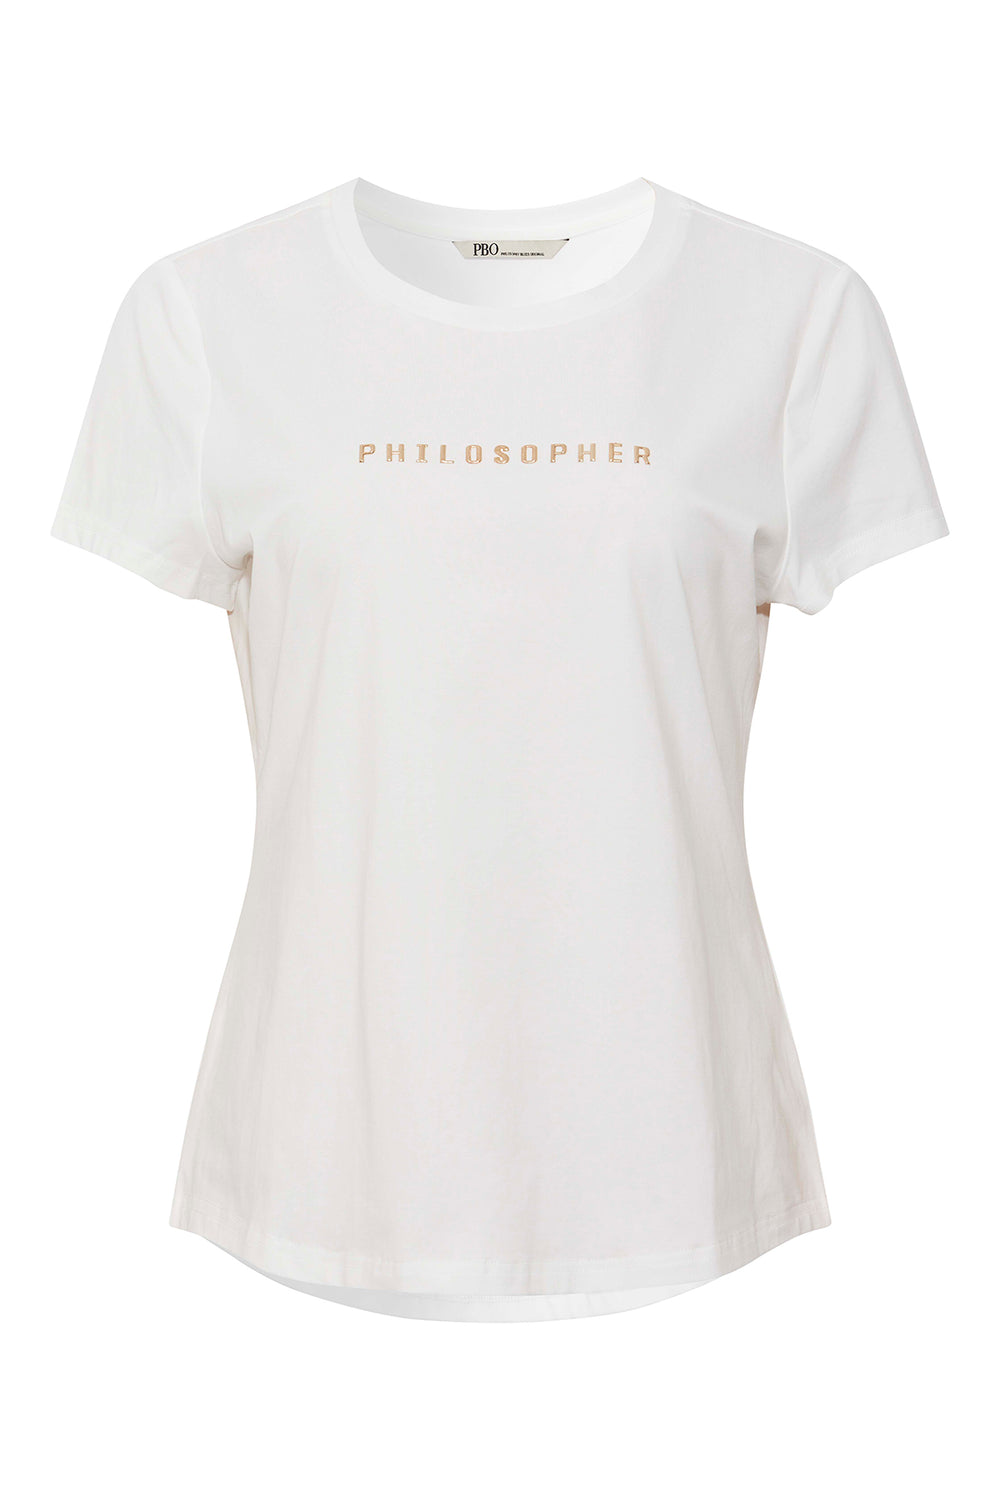 PBO T-shirt - Philosopher T-Shirt i Hvid